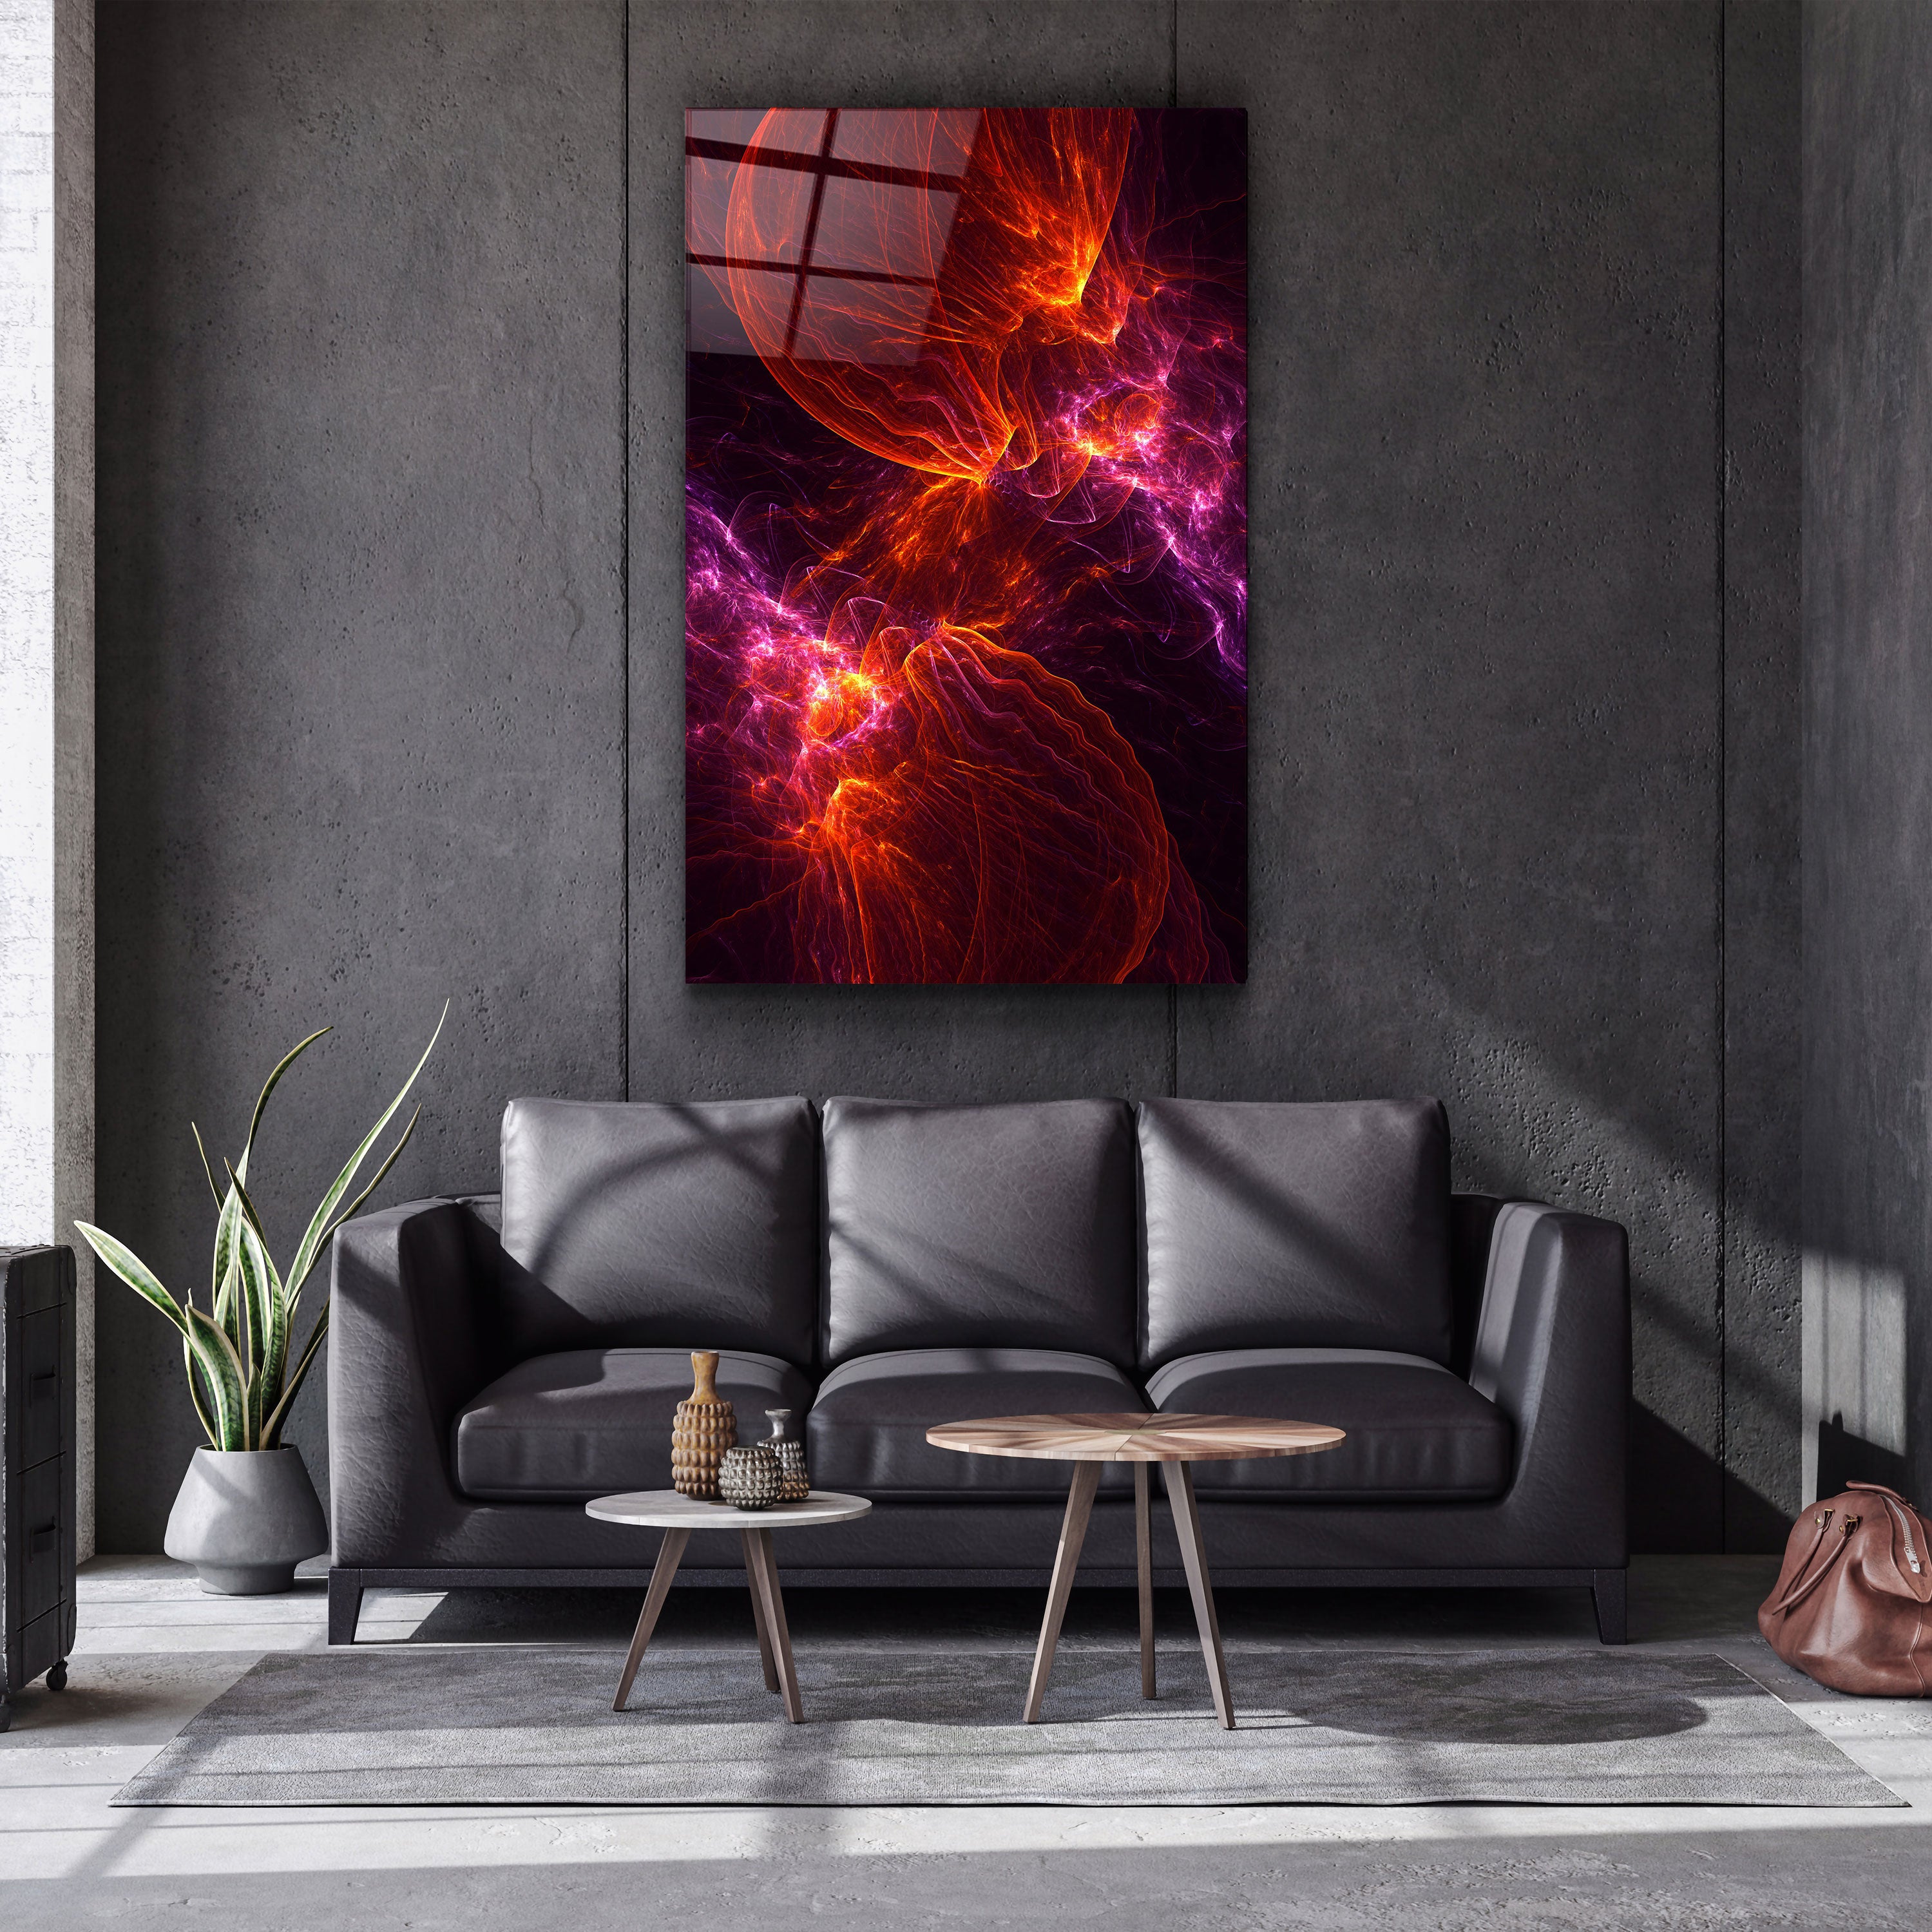 ・"Purple & Red Flames 2 "・Glass Wall Art